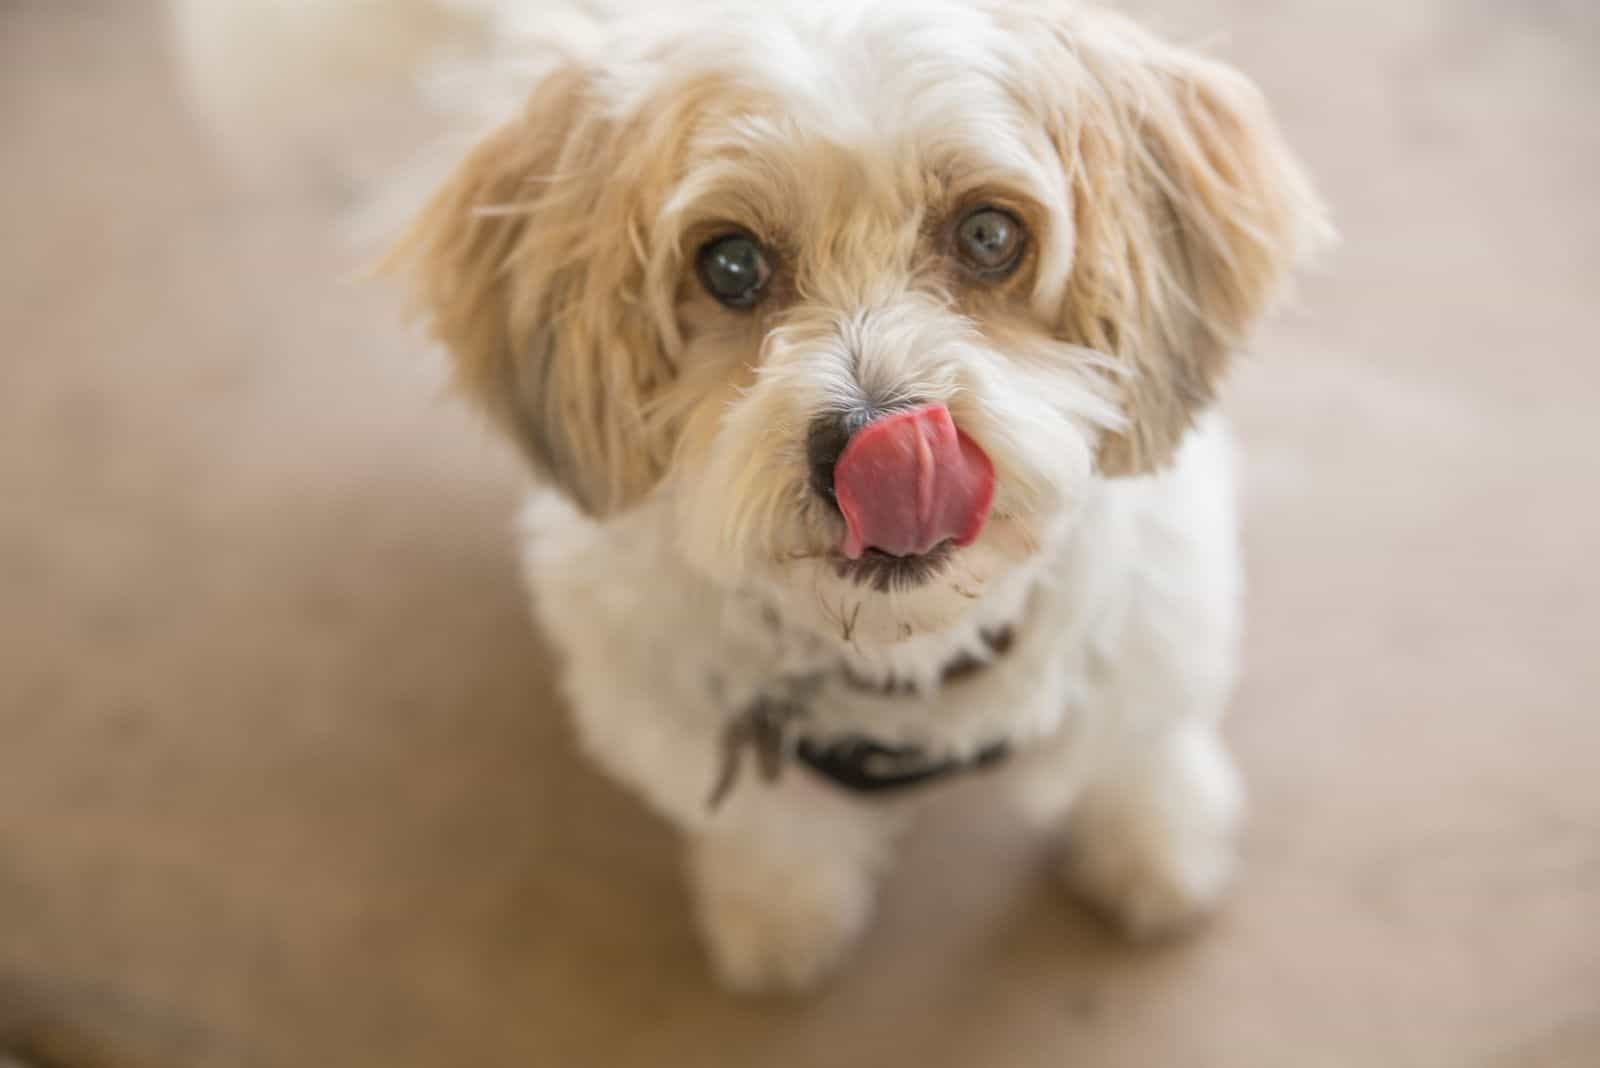 dog licking lips while looking up at the camera